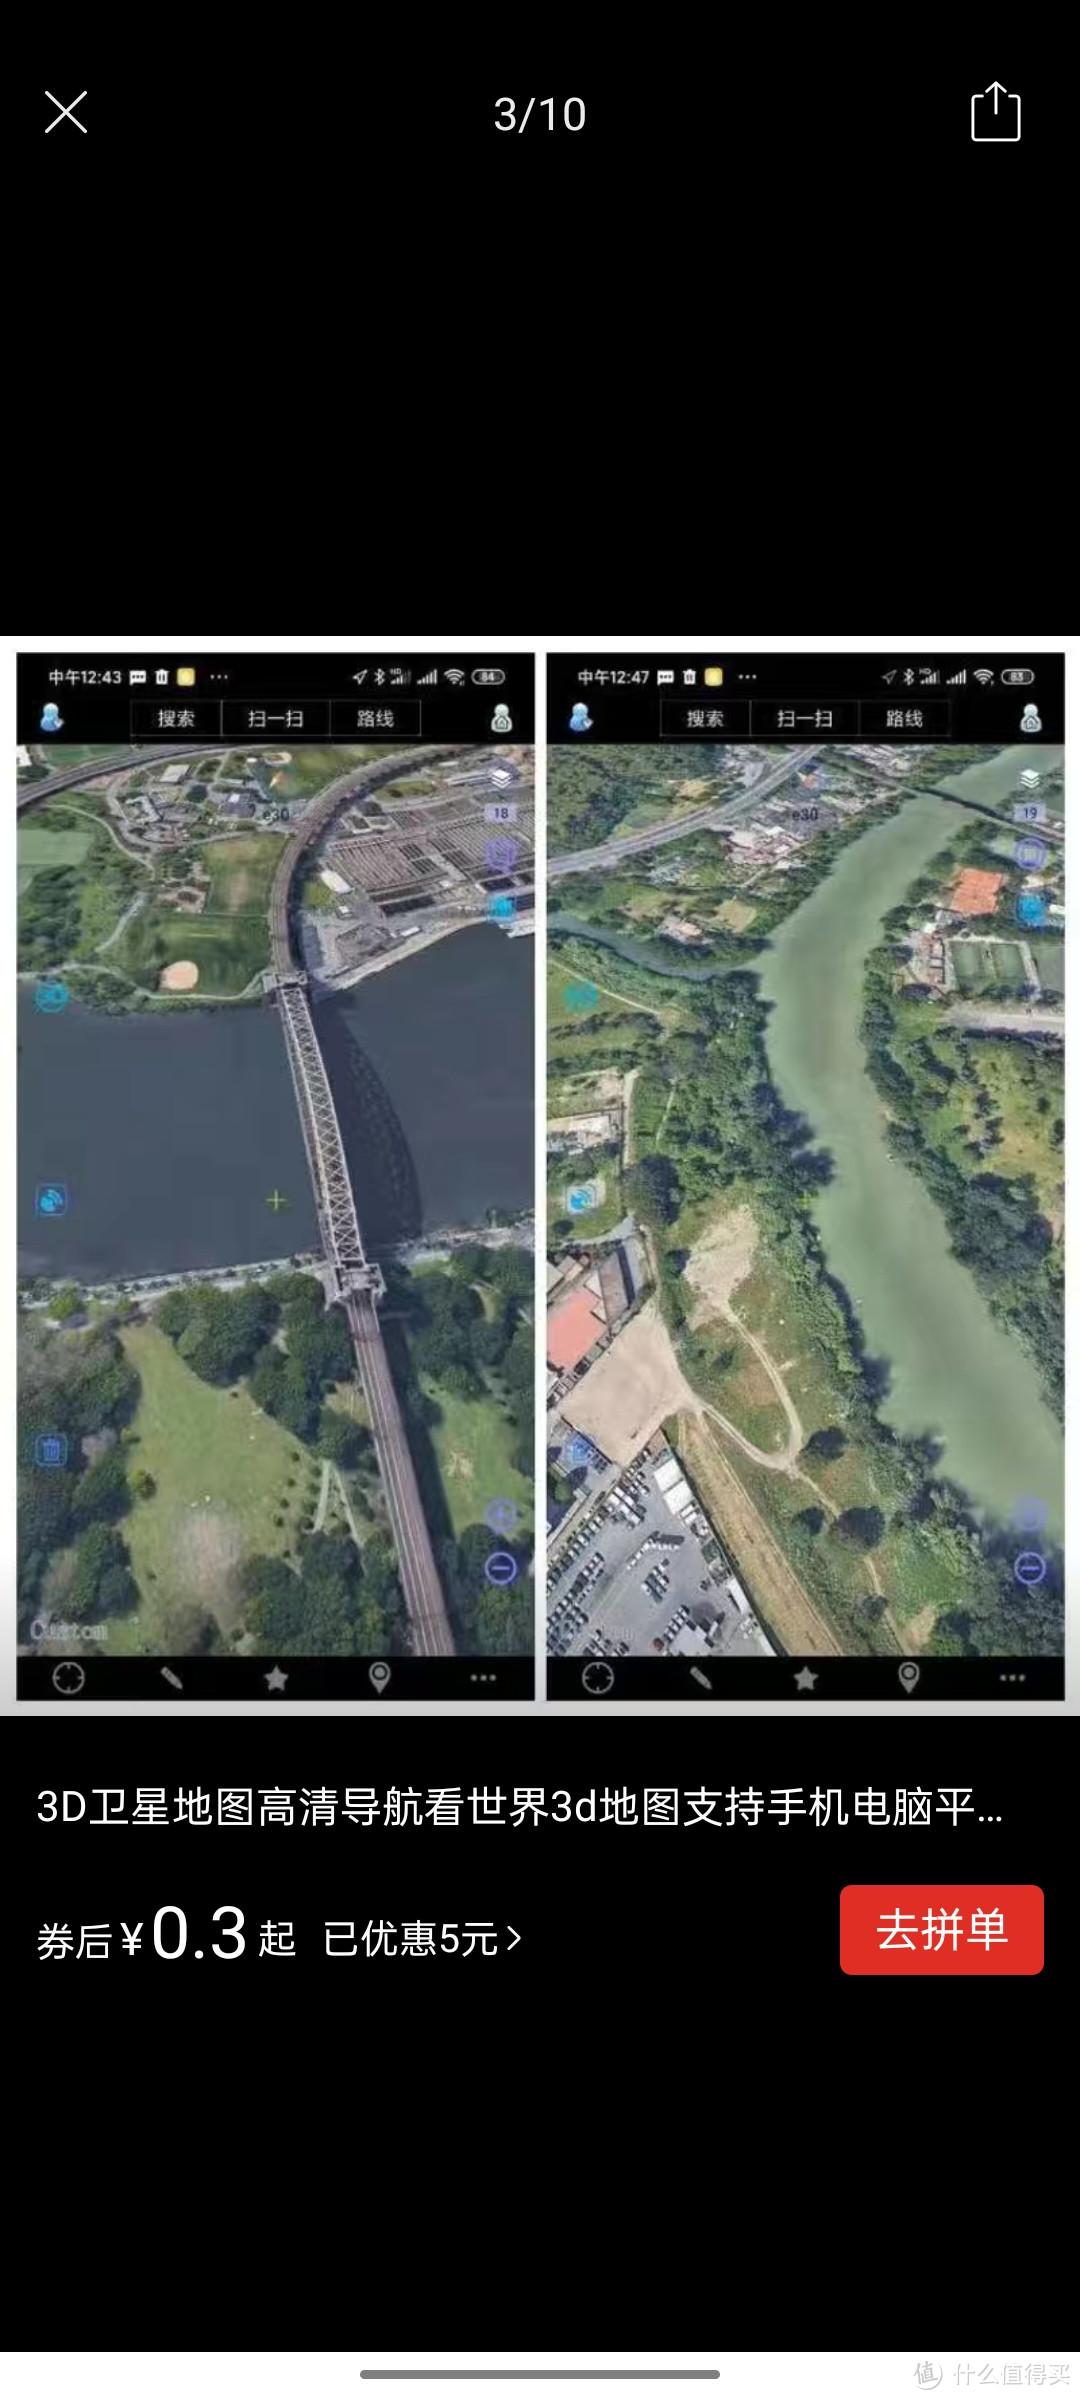 ​3D卫星地图高清导航看世界3d地图支持手机电脑平板三维地图好物分享呀冲冲冲买买买买买买买买买买买买买